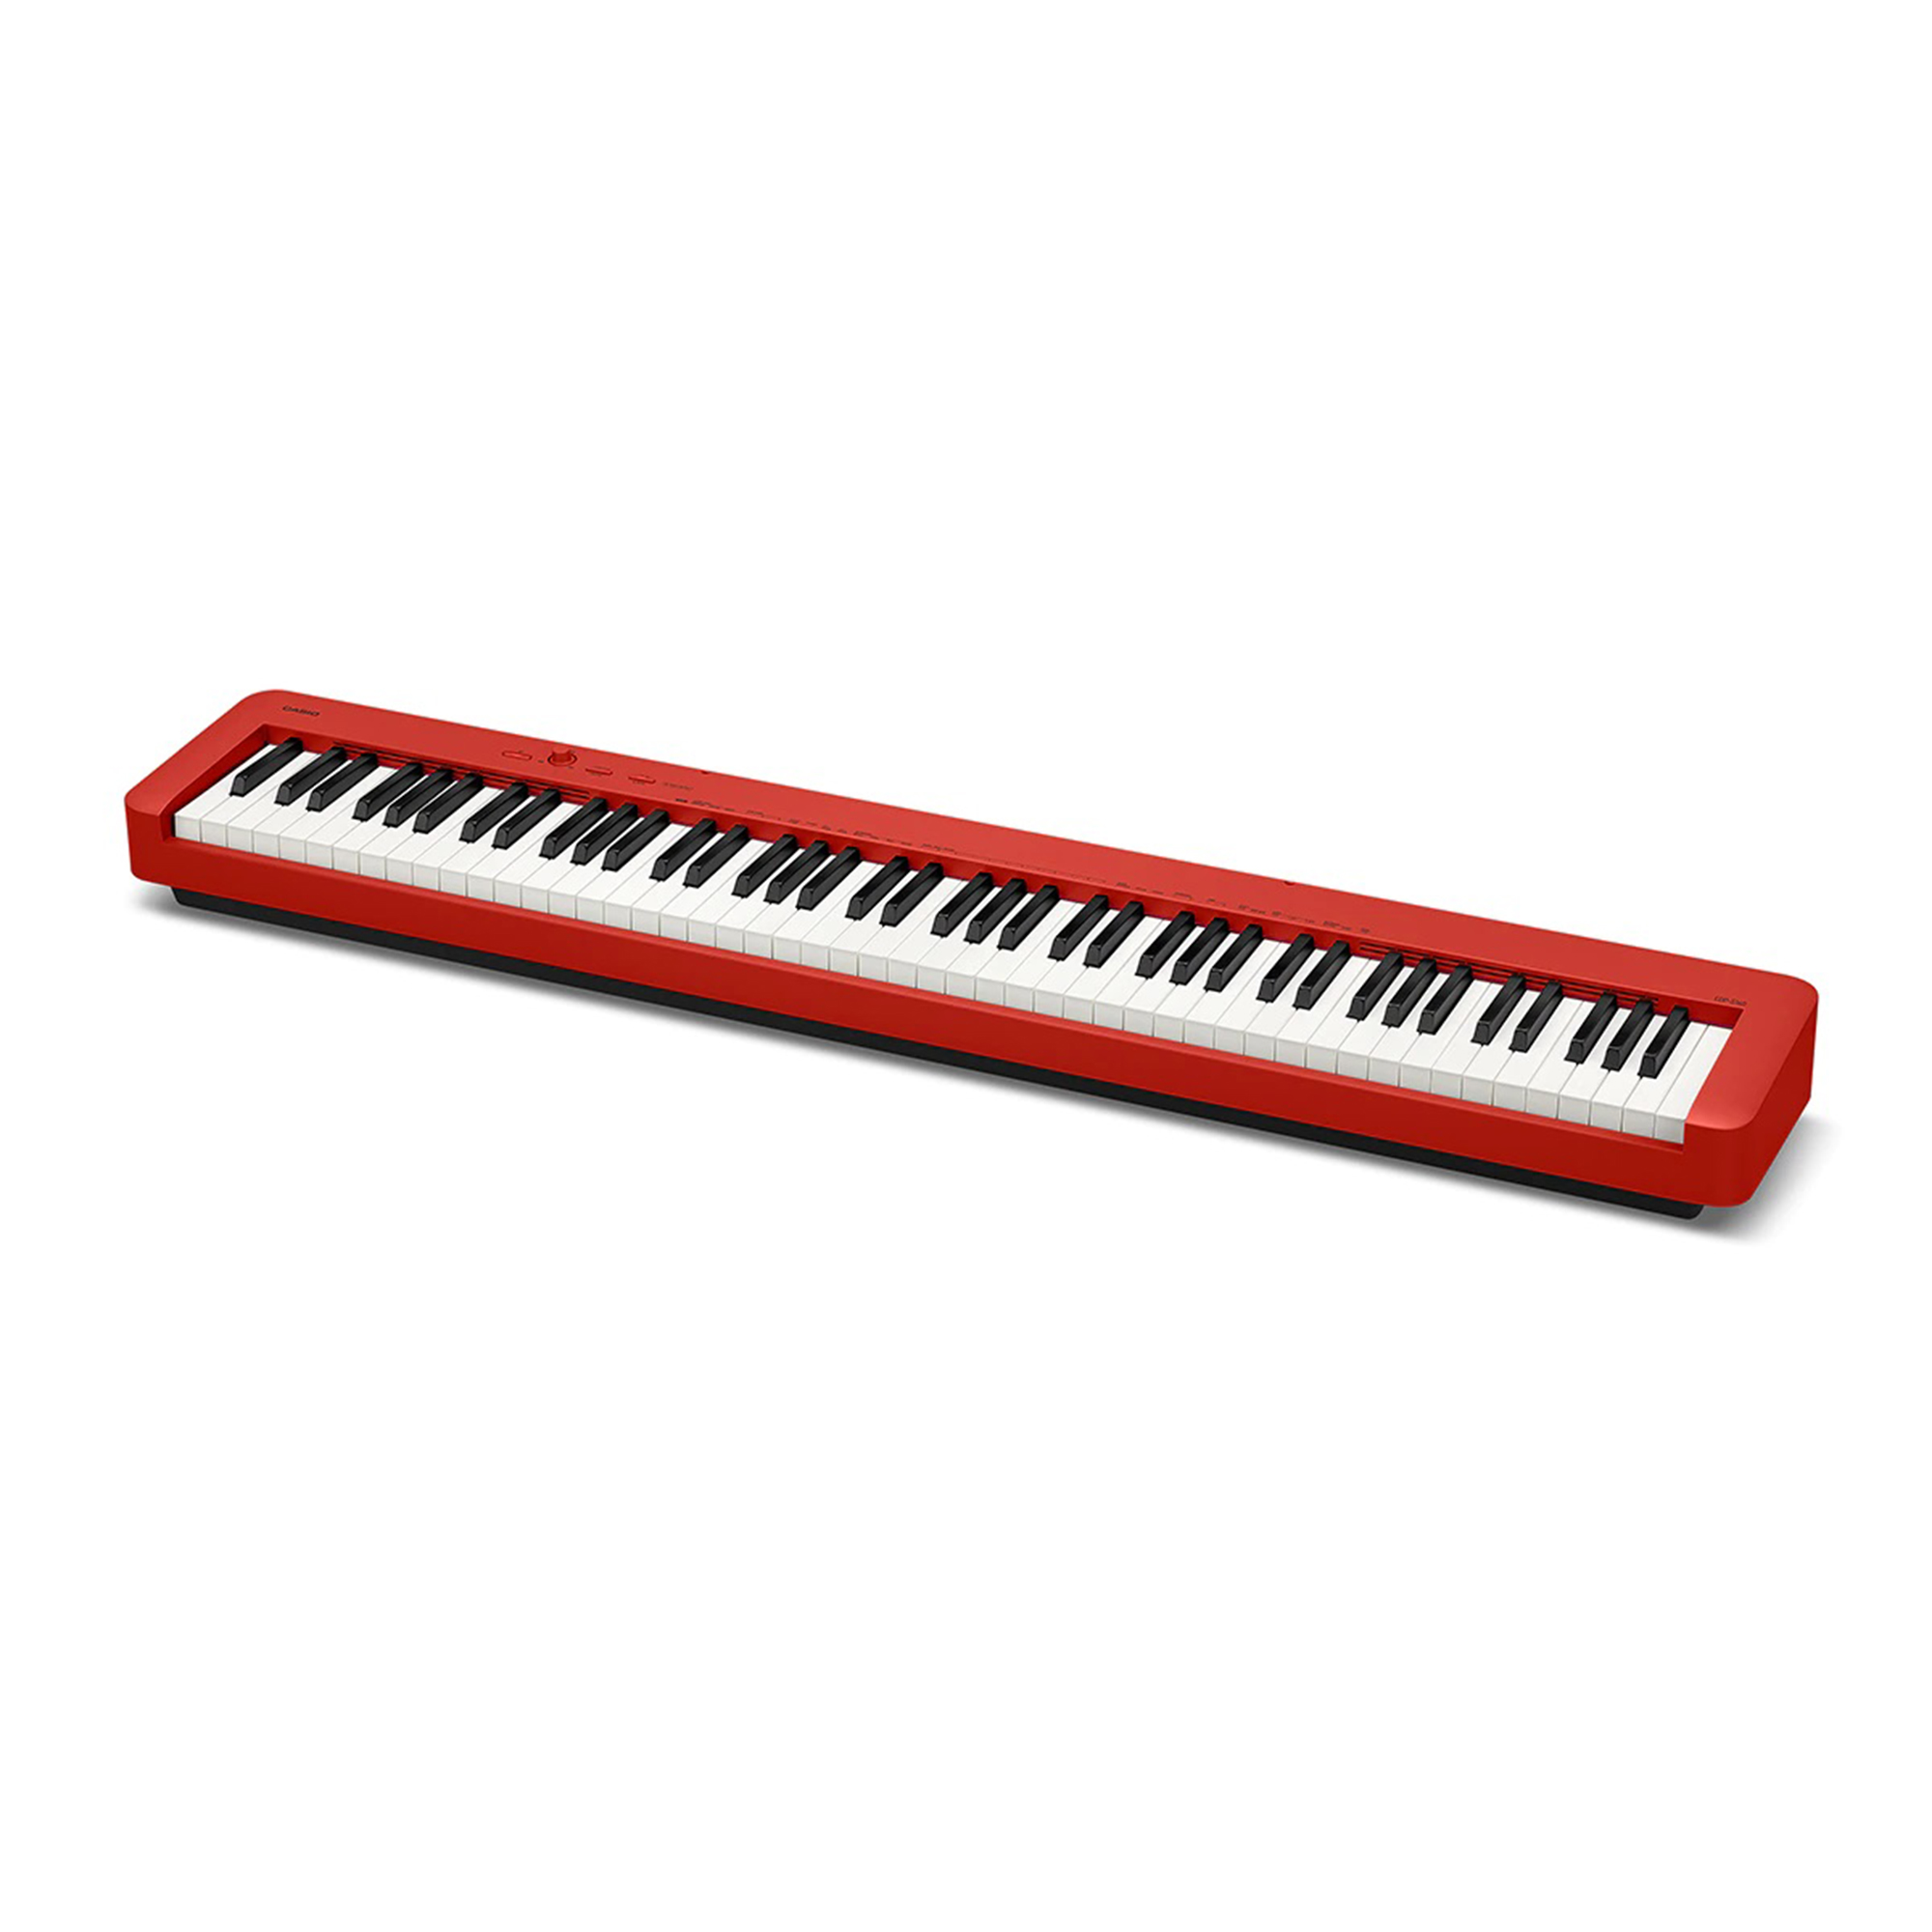 casio cdp-s160 red digital piano singapore tmw